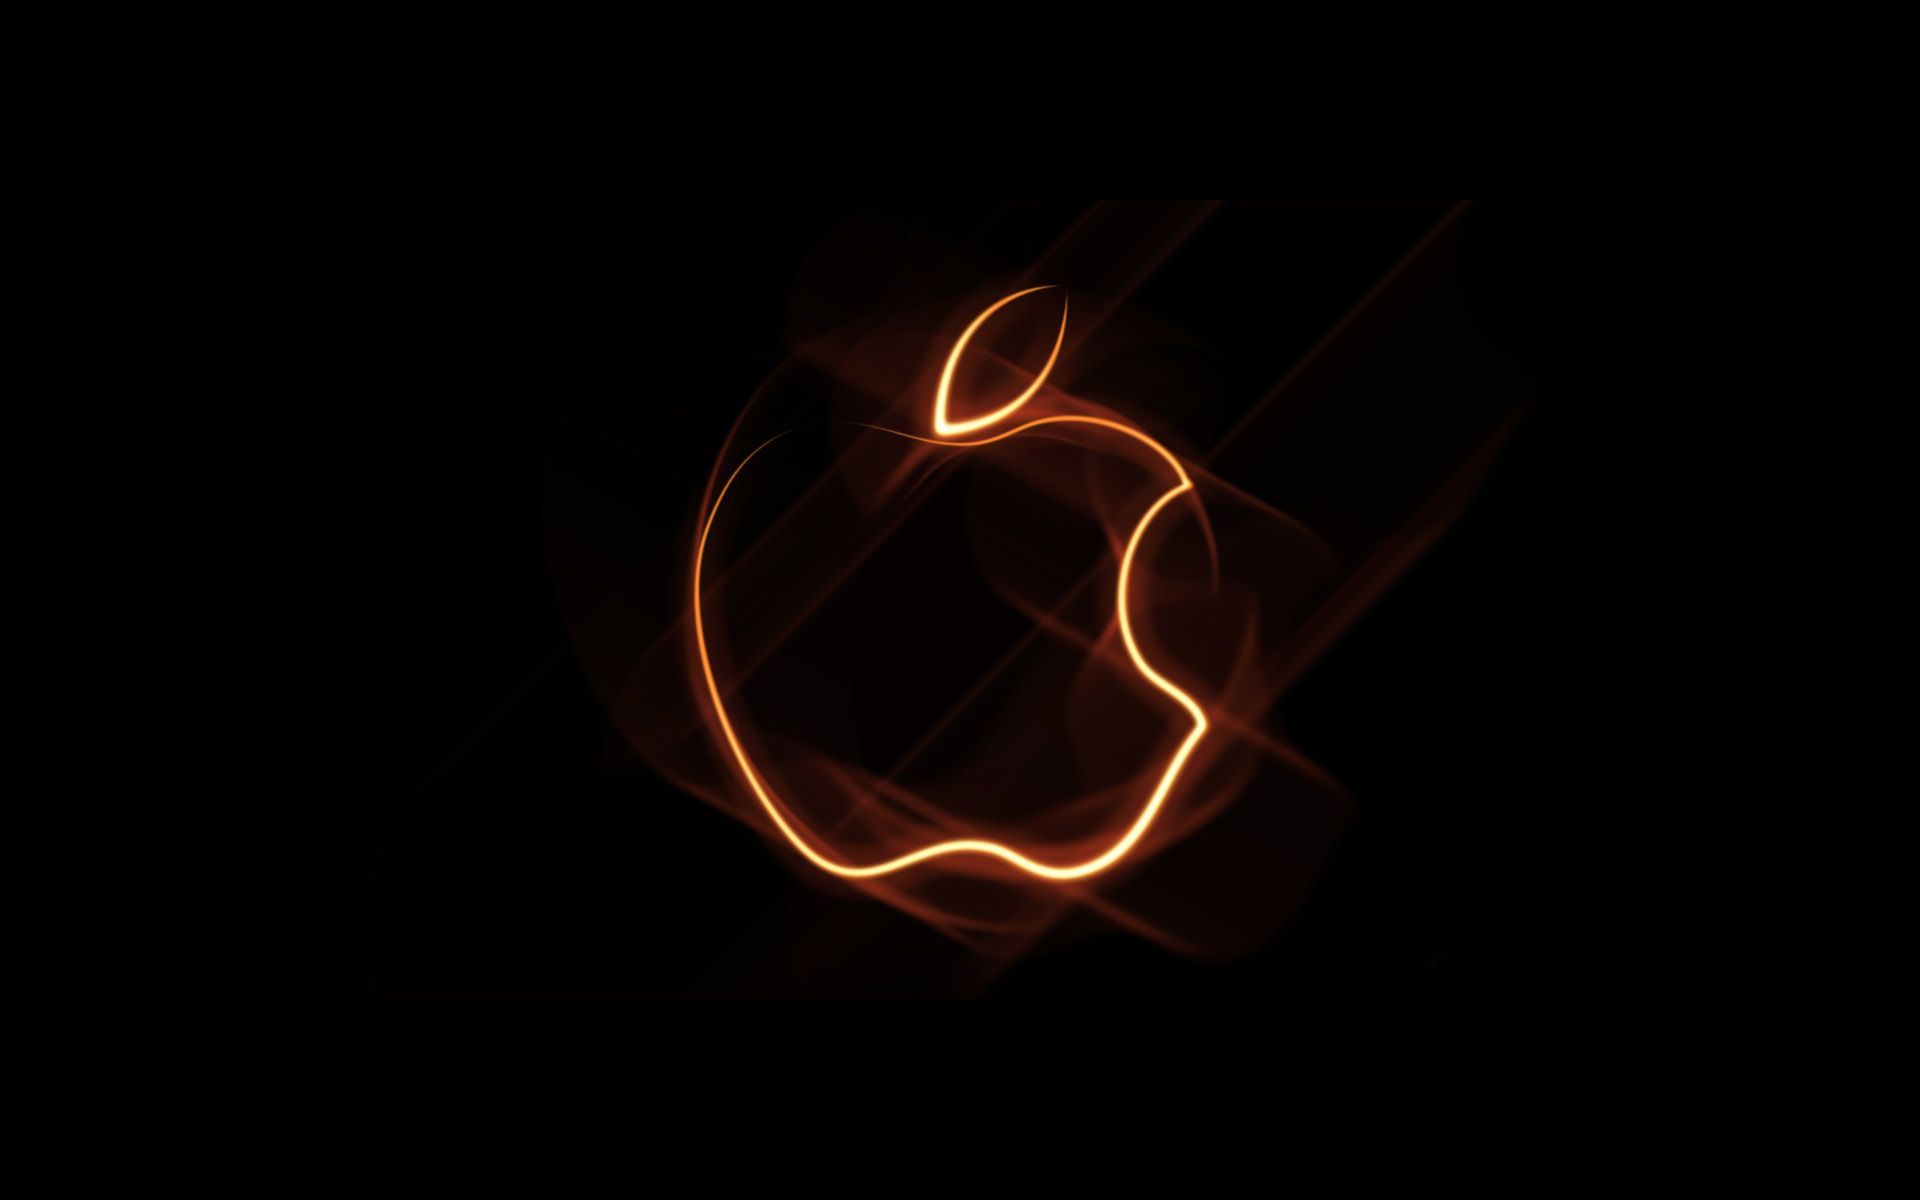 50 Inspiring Apple Mac & iPad Wallpapers For Download